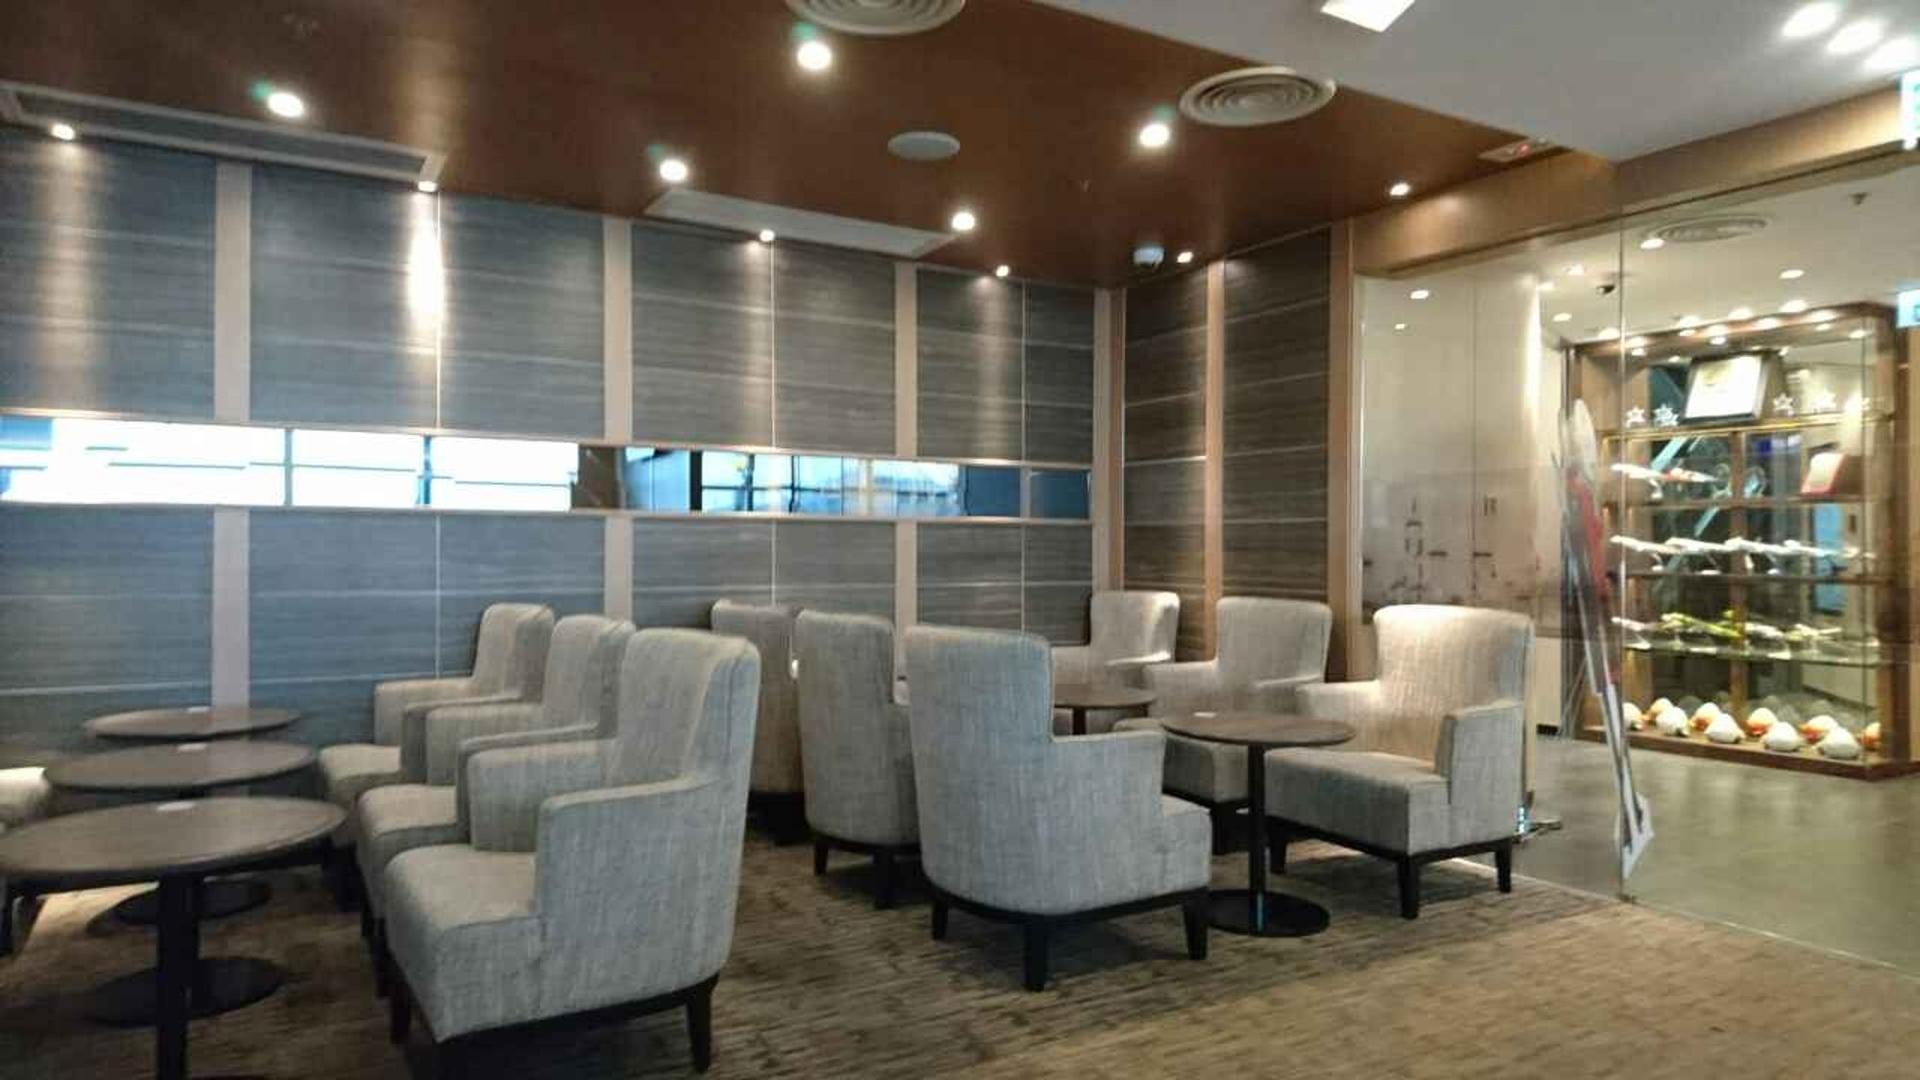 Hong Kong Airlines VIP Lounge (Club Bauhinia) image 22 of 40